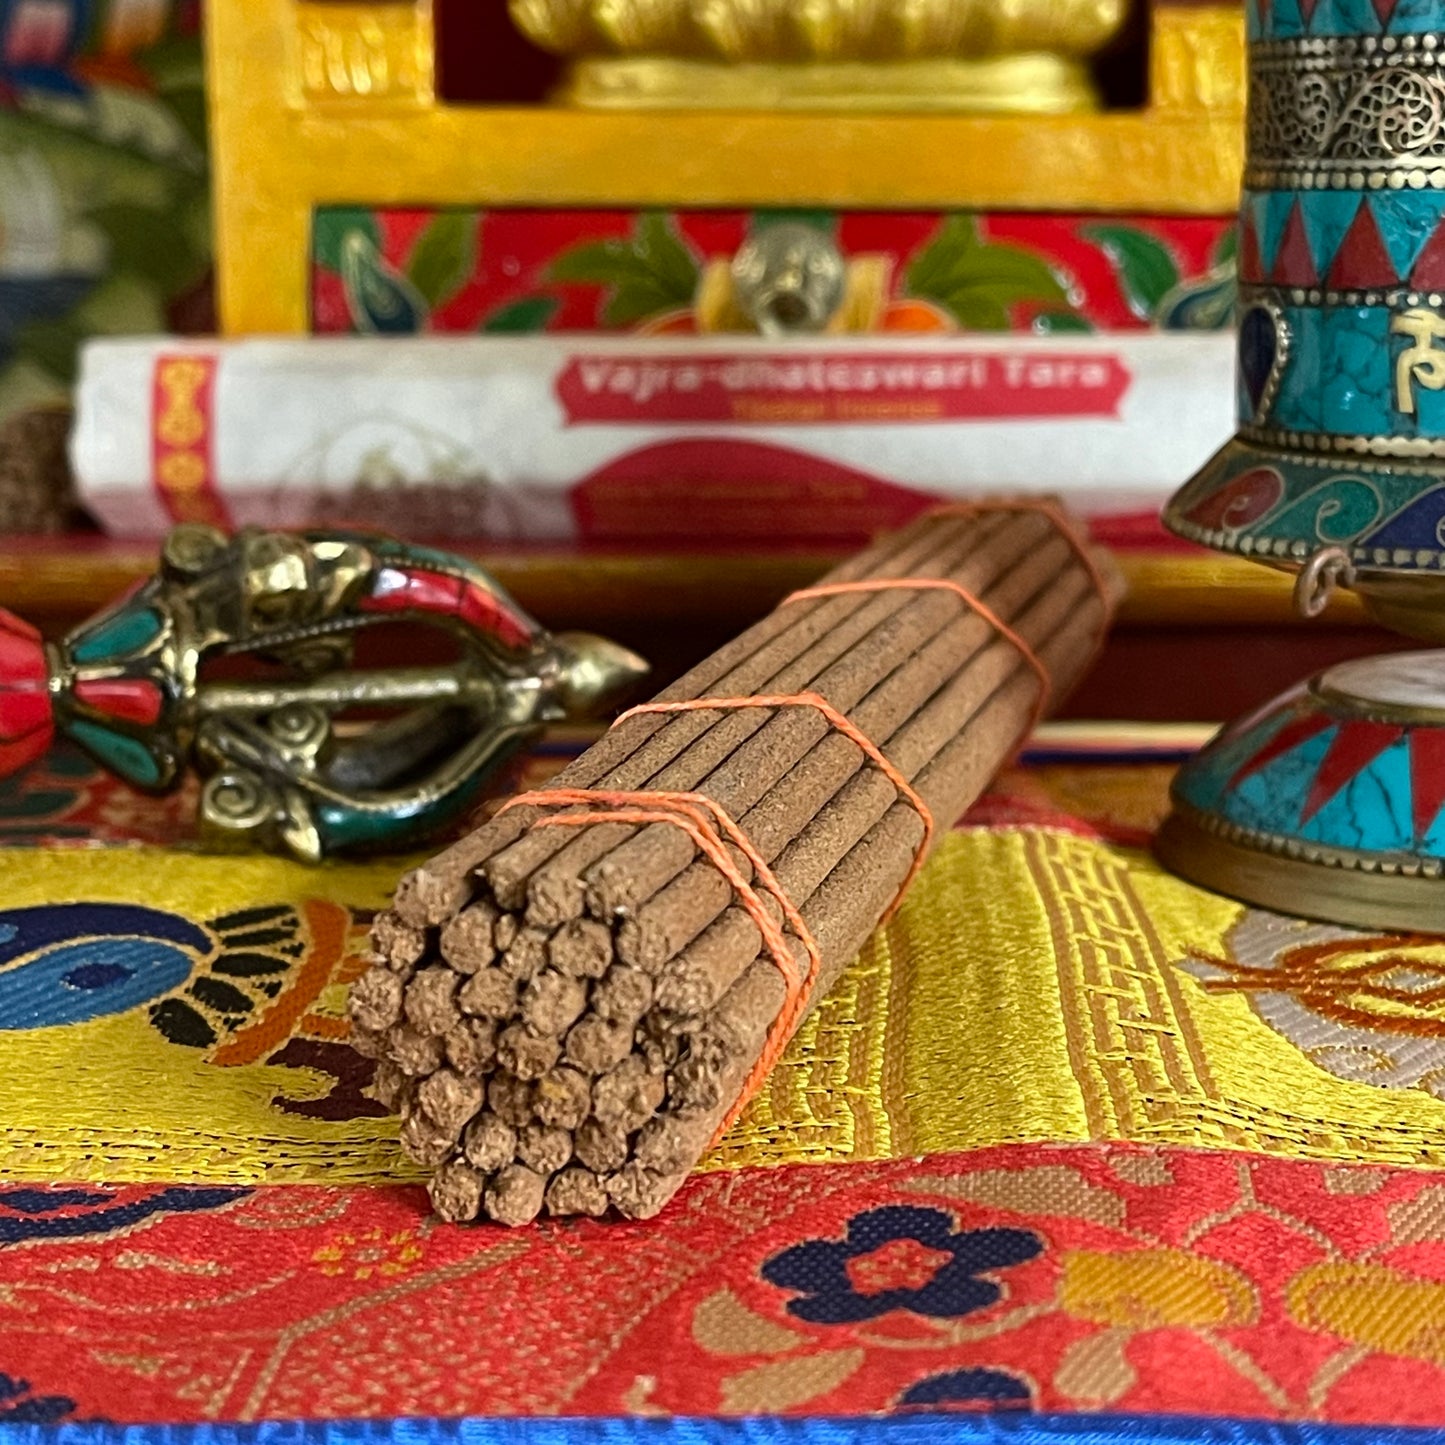 Chandra Devi Vajra-Dhateswari Tara Tibetan Incense